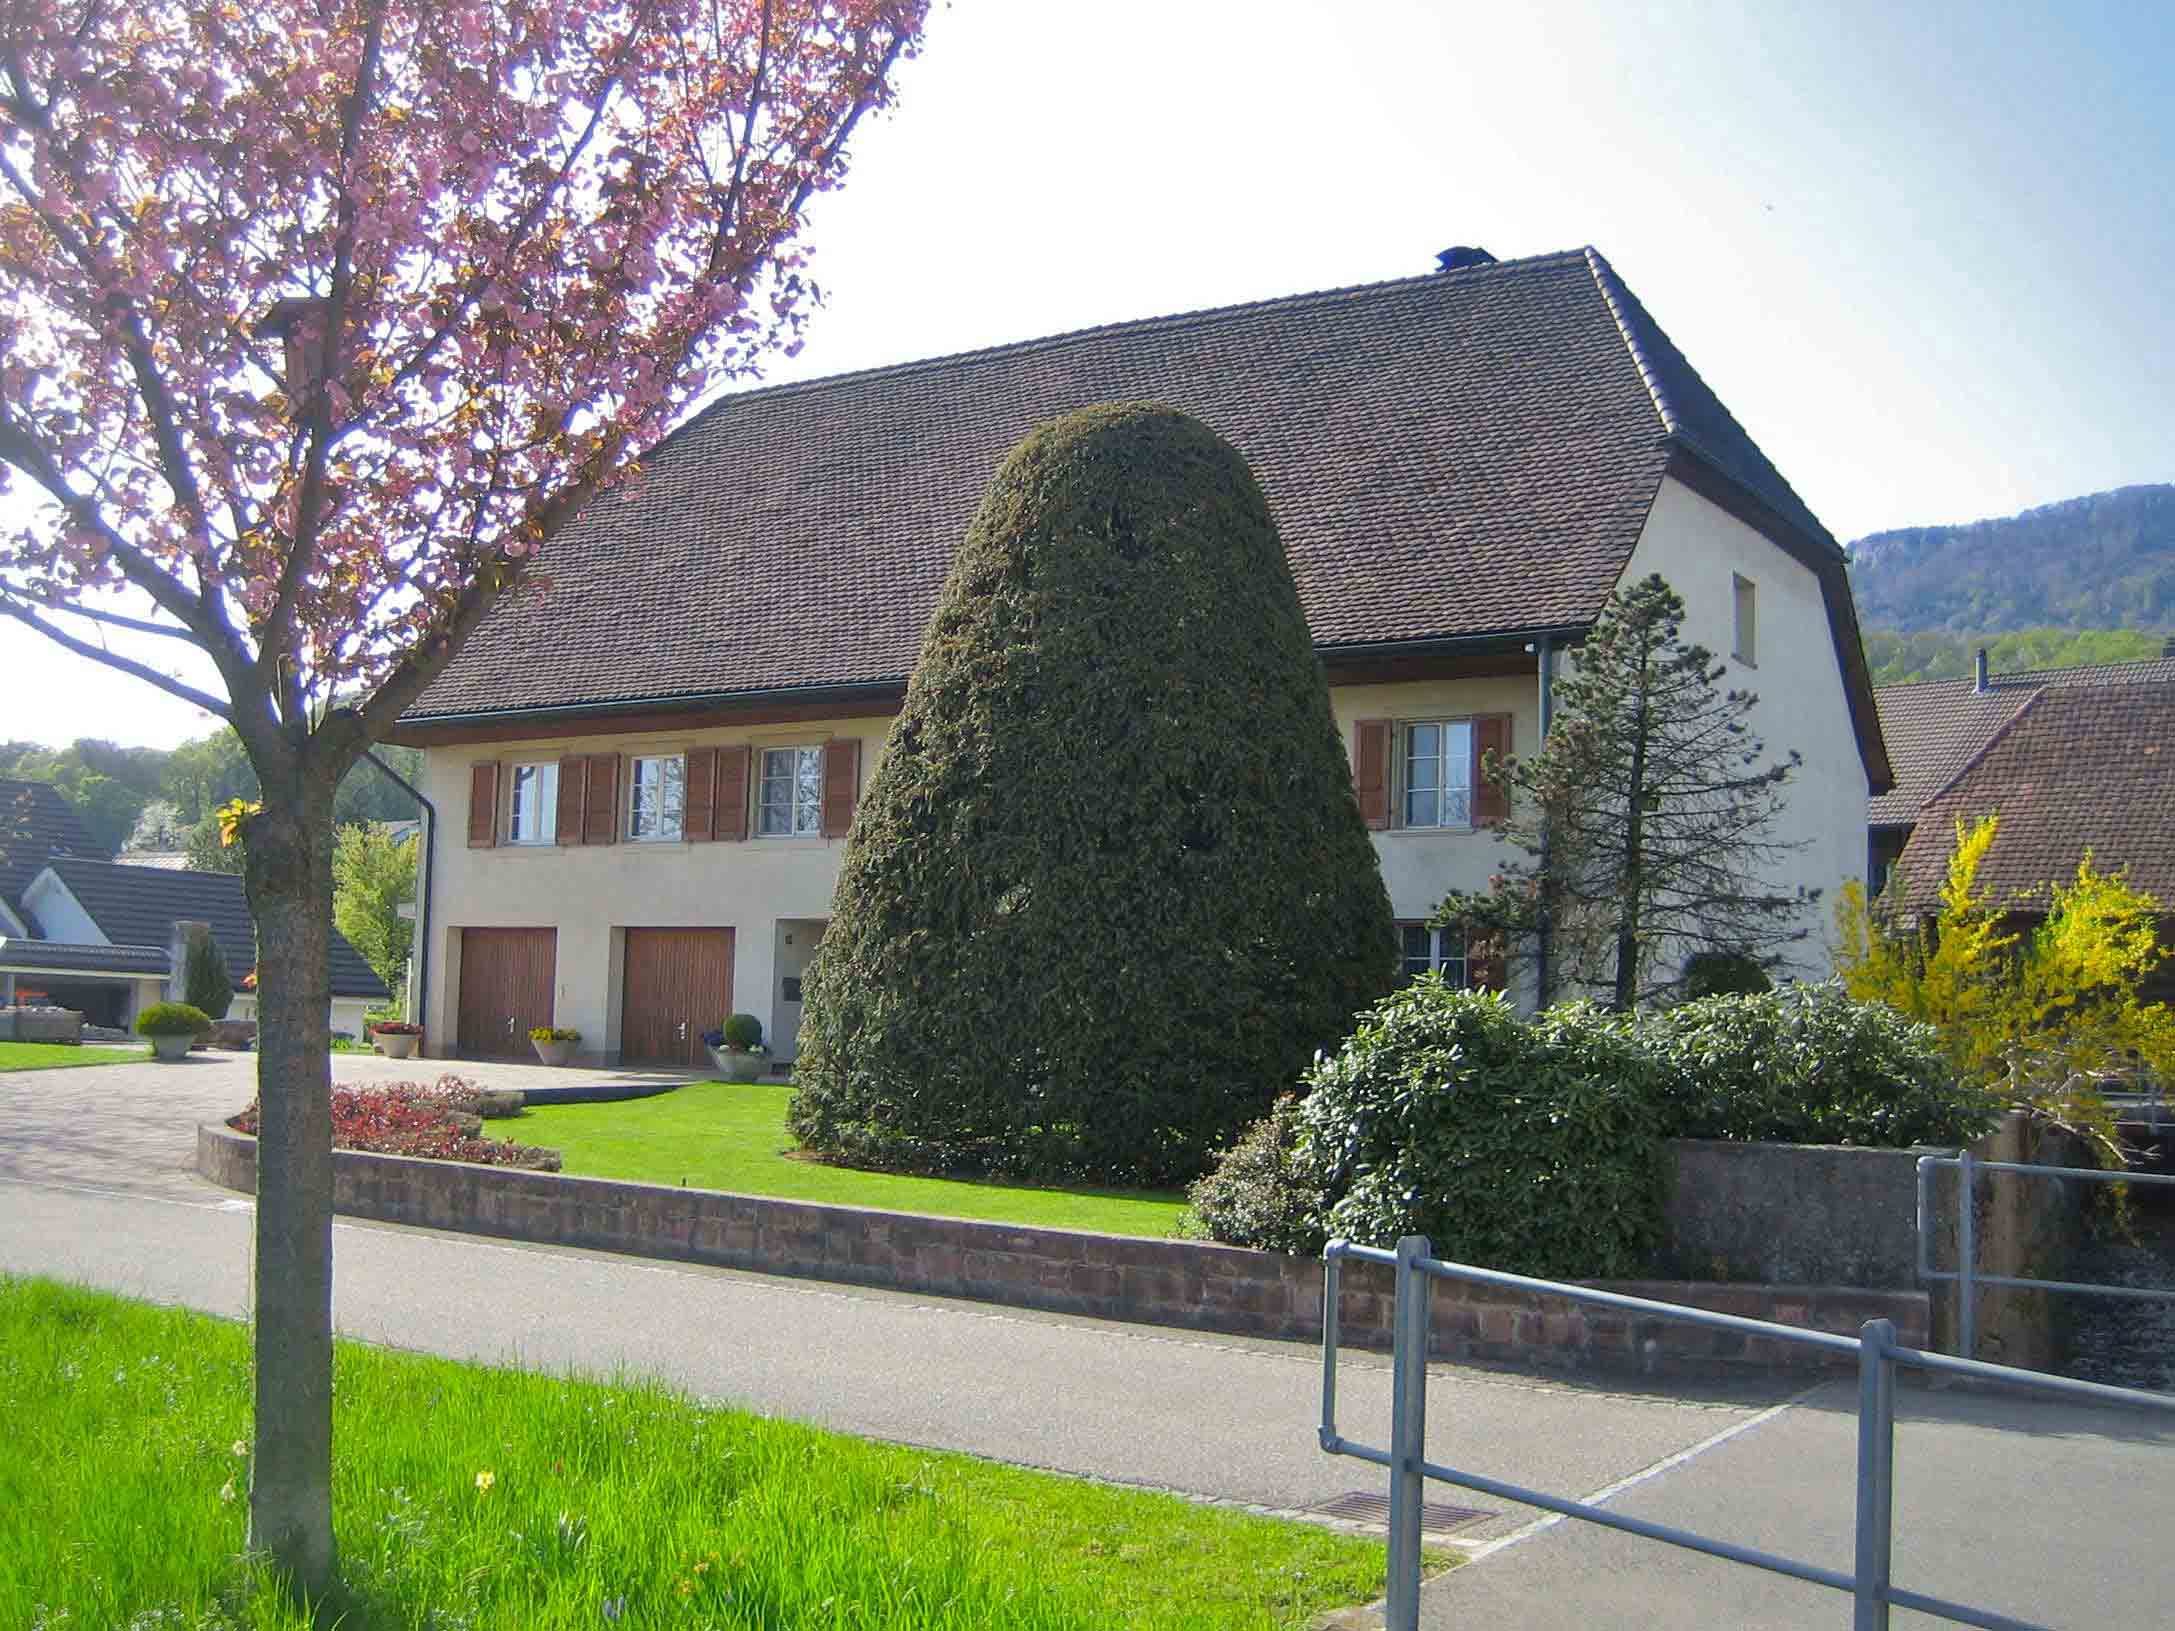 Umgebautes Bauernhaus mit alter Eibe - Converted farmhouse with old yew tree